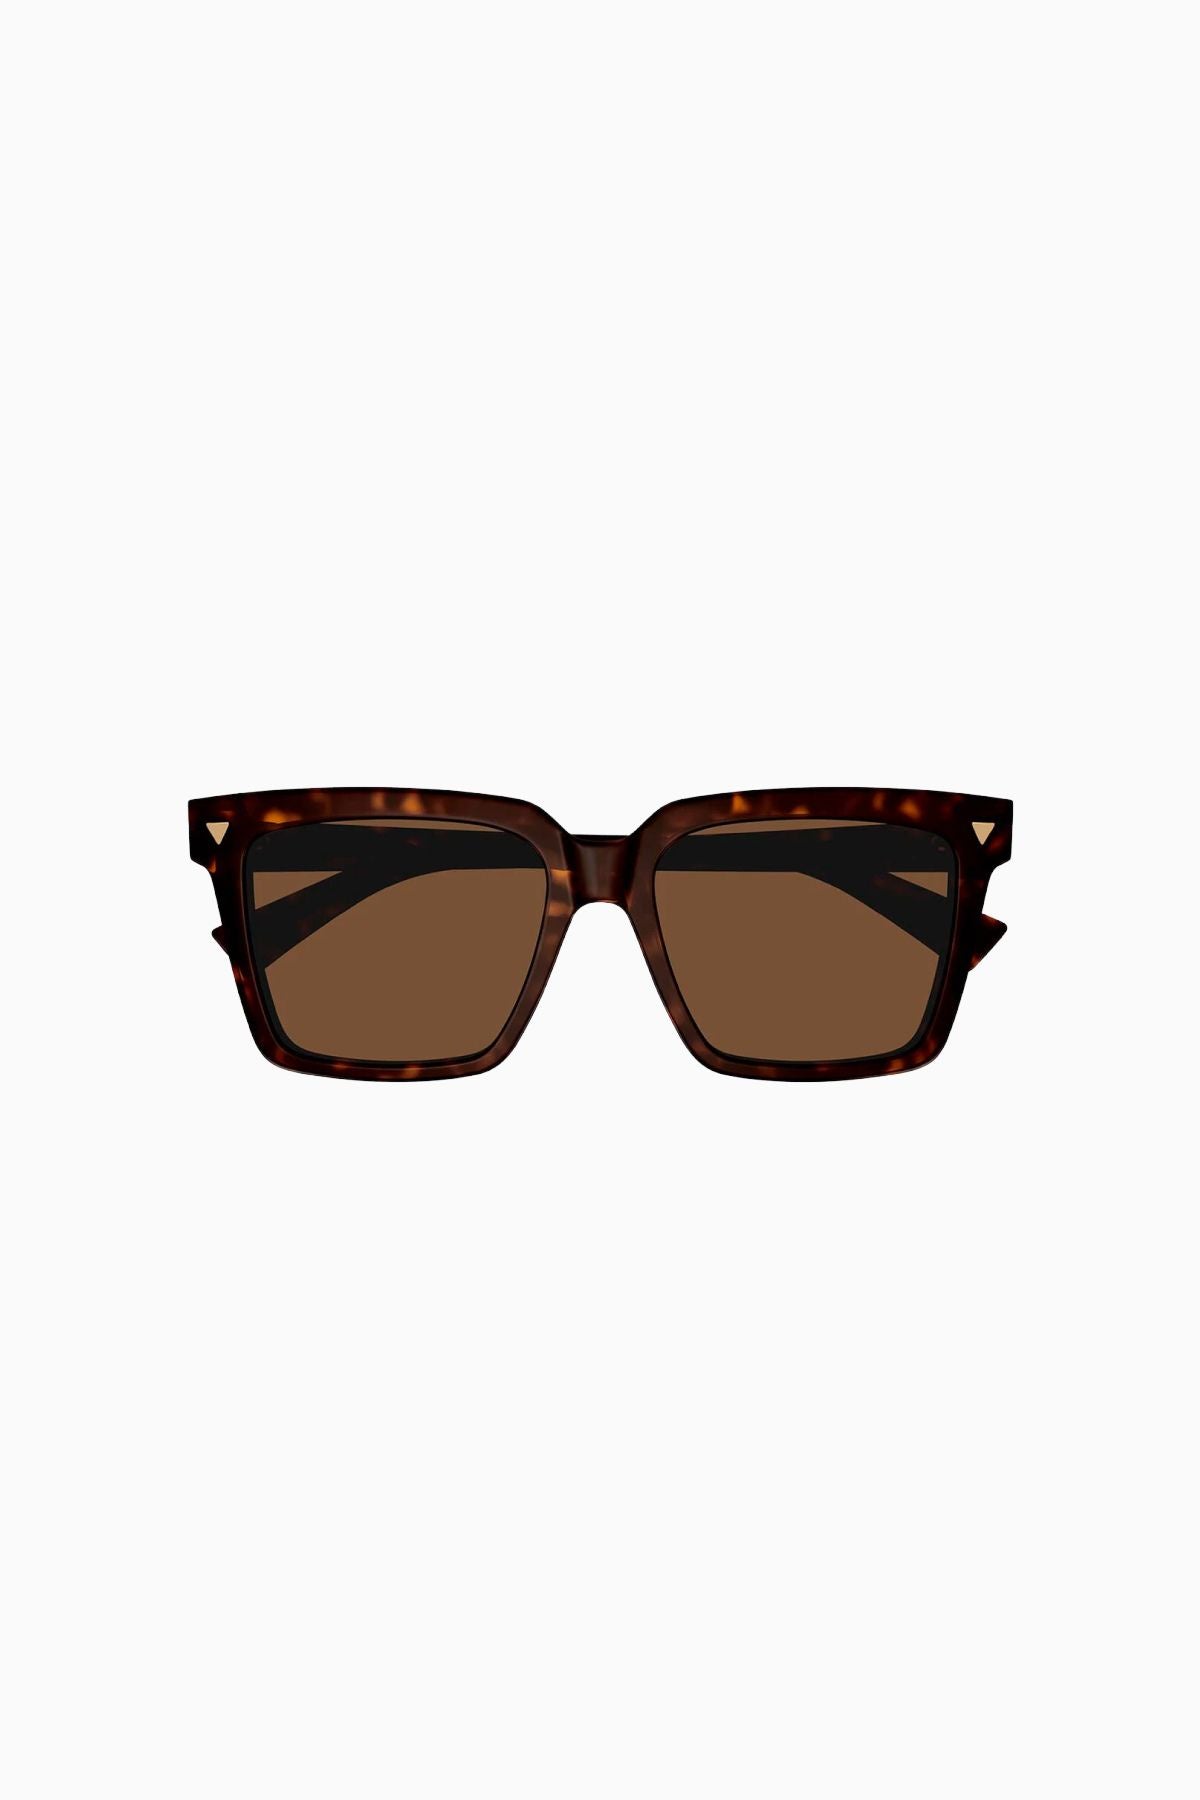 Bottega Veneta Square Framed Sunglasses - Havana